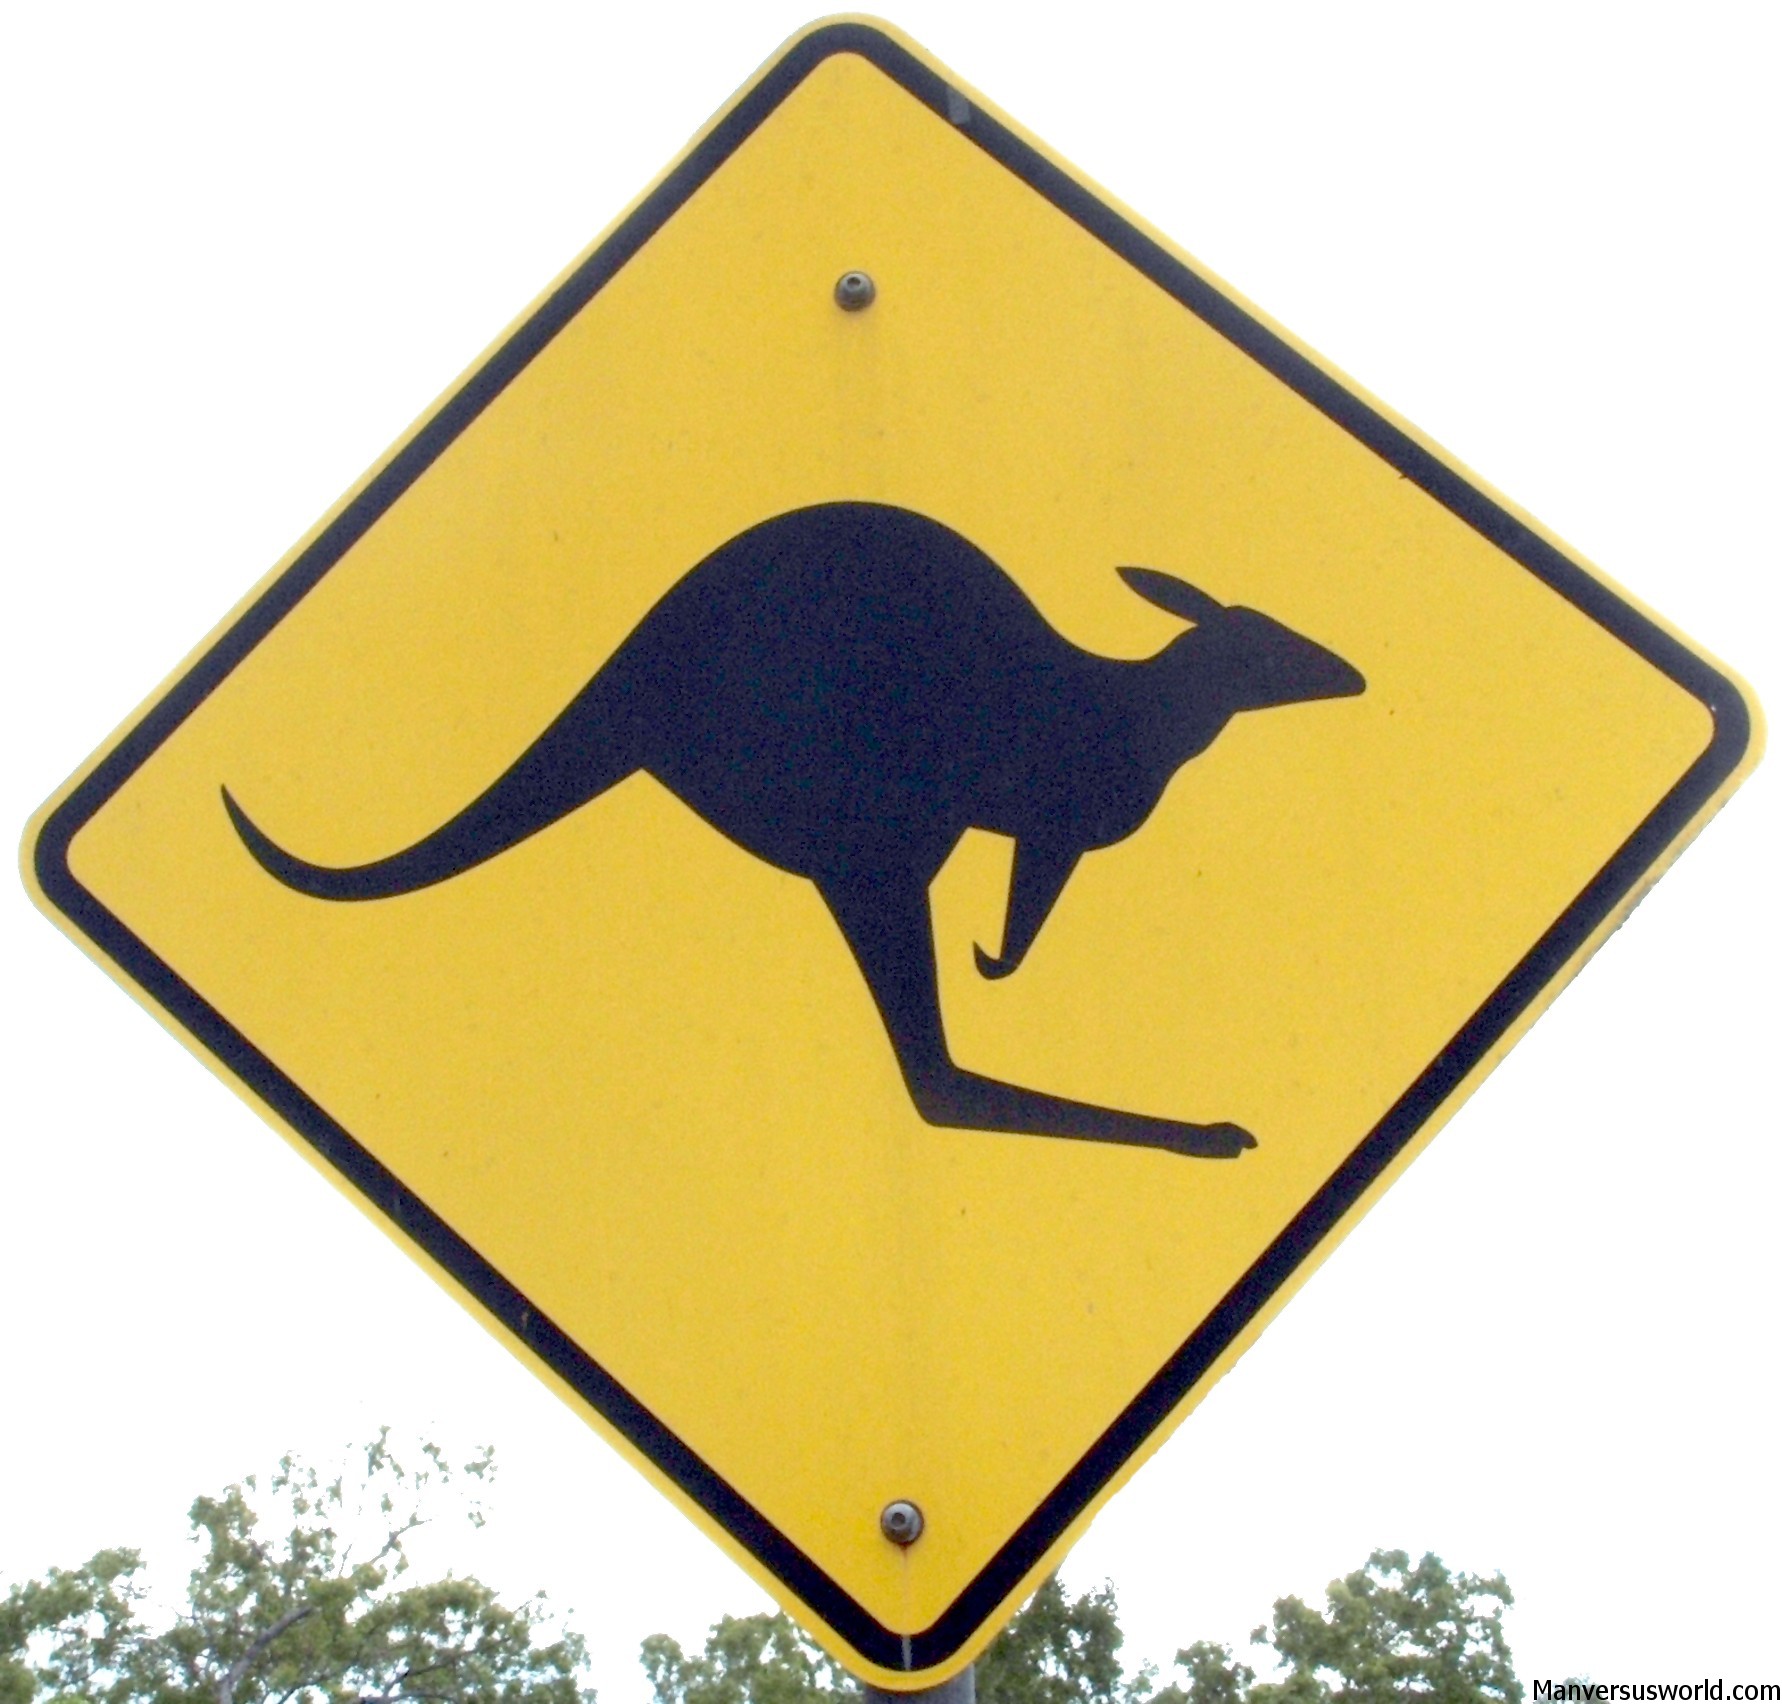 A Kangaroo warning sign in Australia